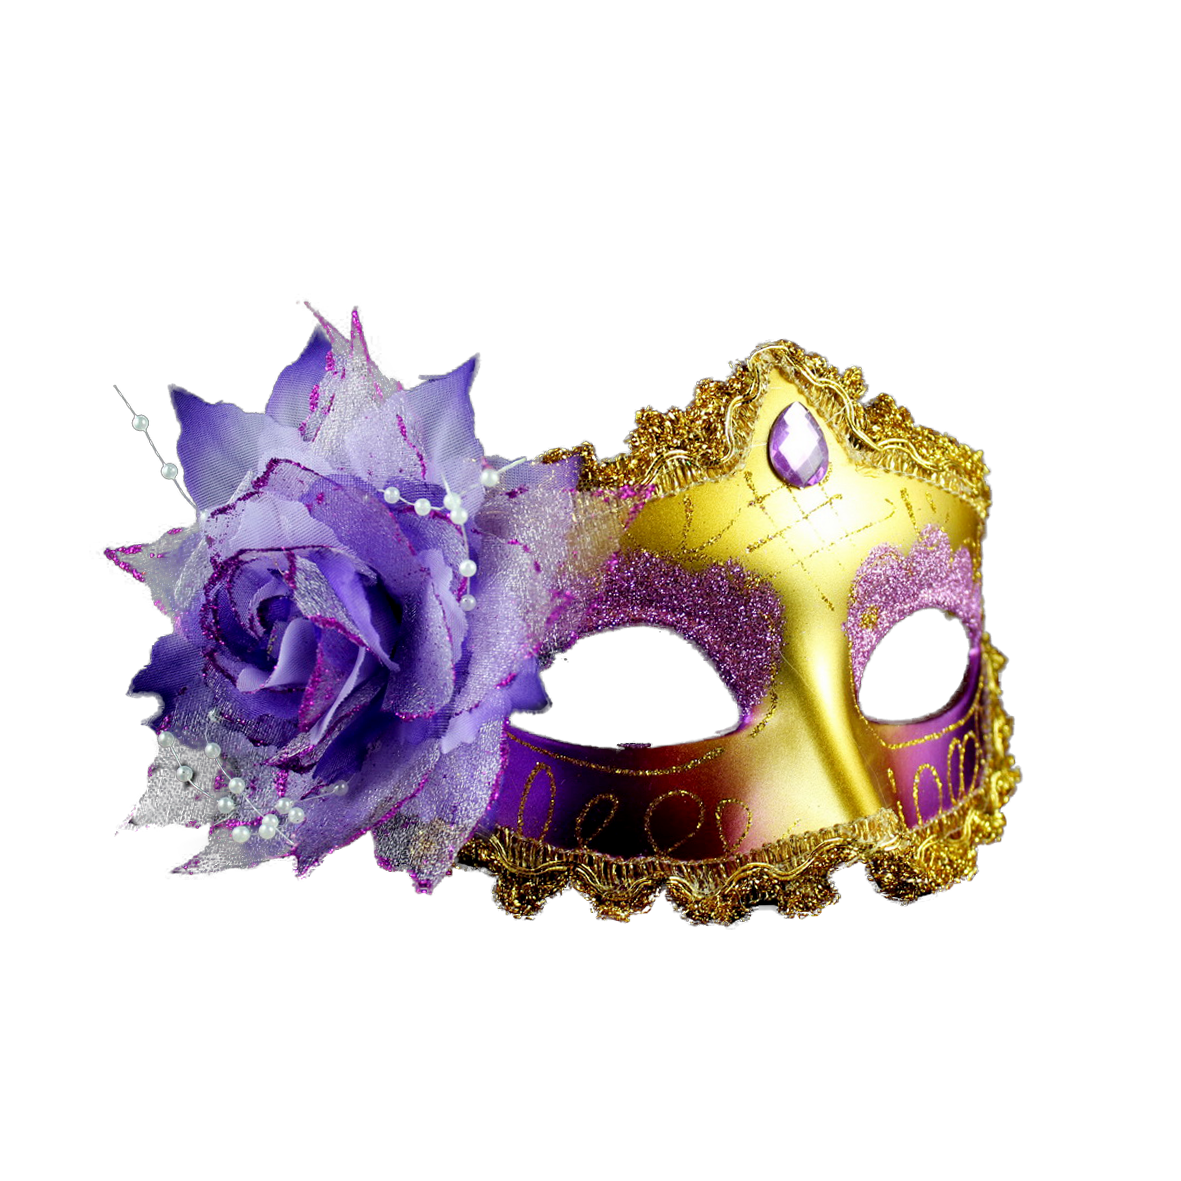 Mardi Ball Masquerade Gras Mask Costume Party Clipart